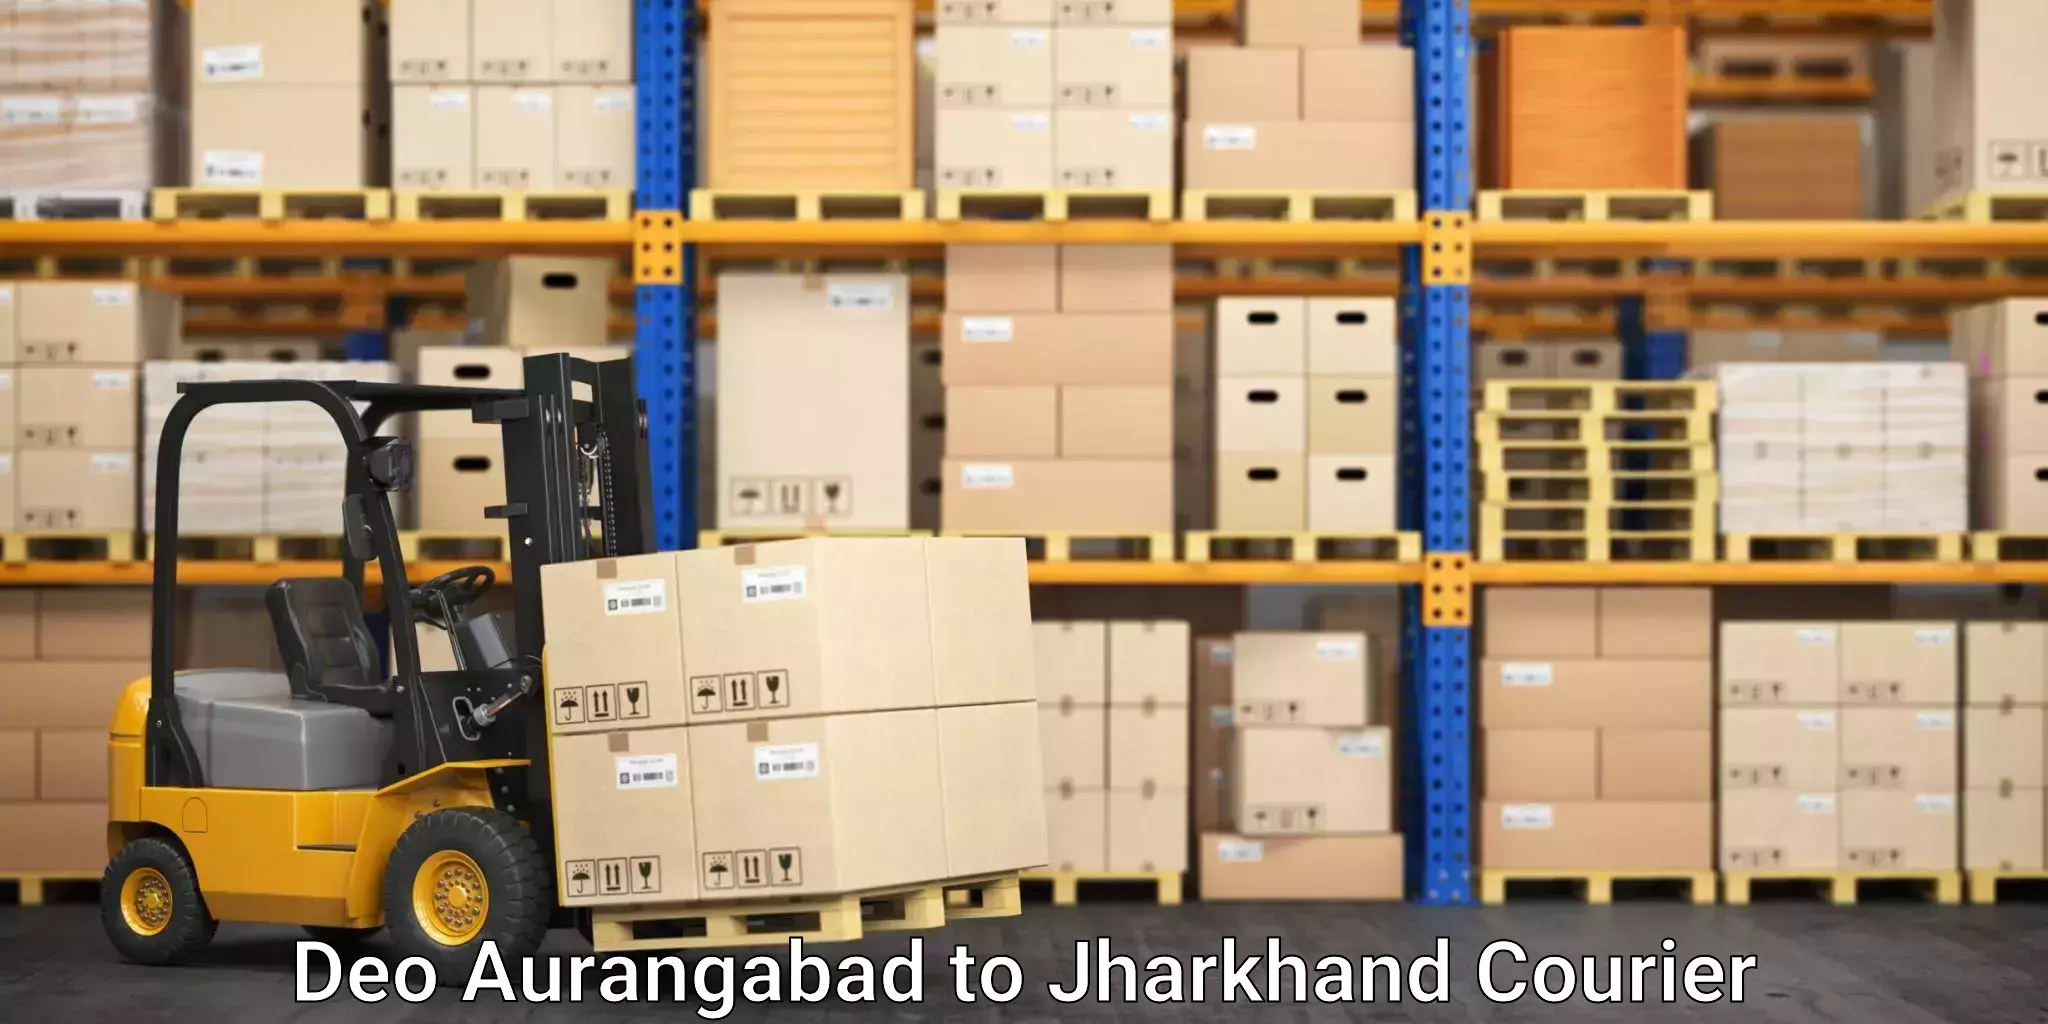 Professional furniture relocation Deo Aurangabad to Jamshedpur